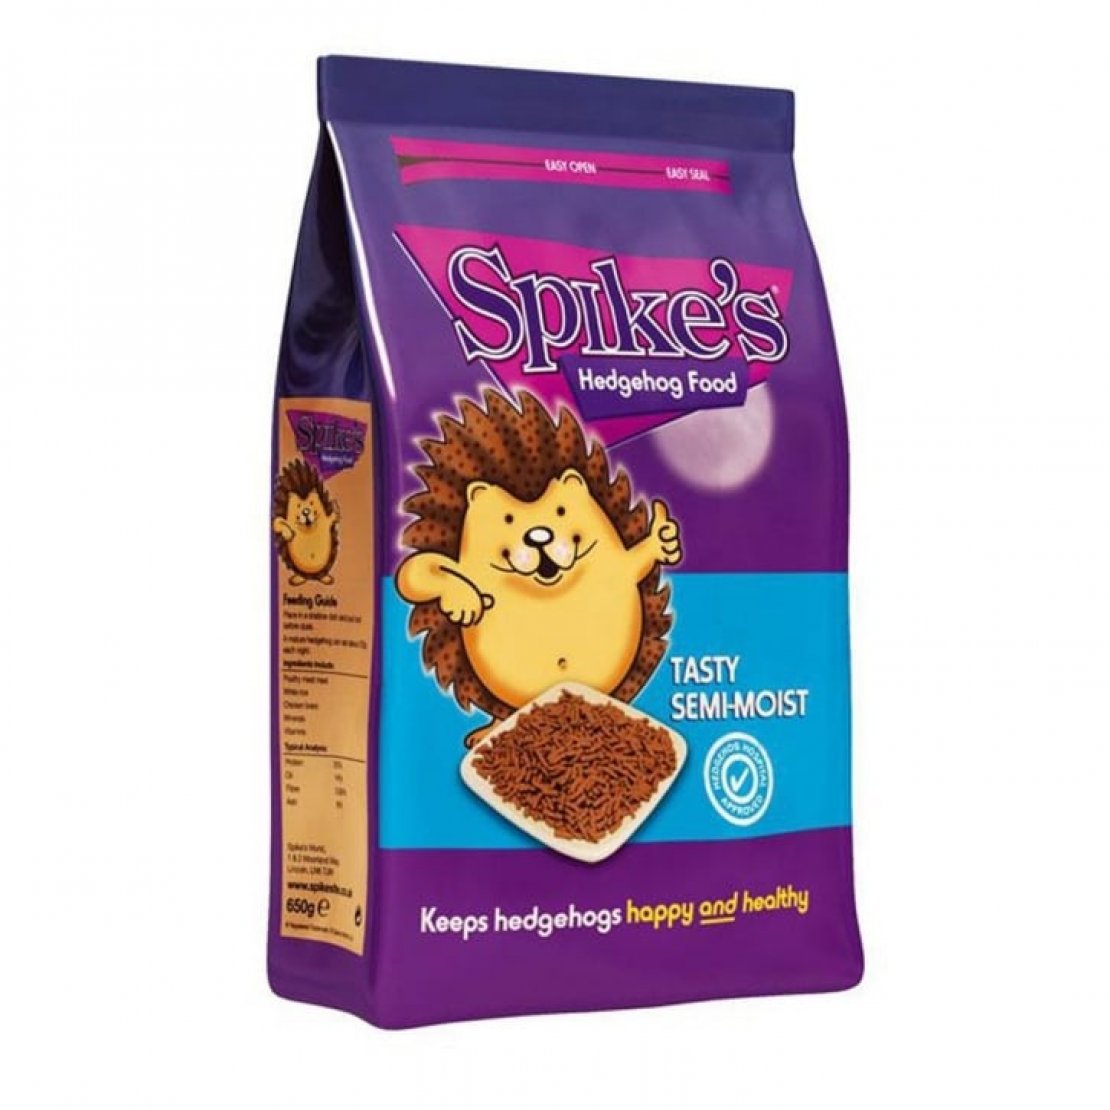 Spike's Tasty Semi-moist Hedgehog Food 550g